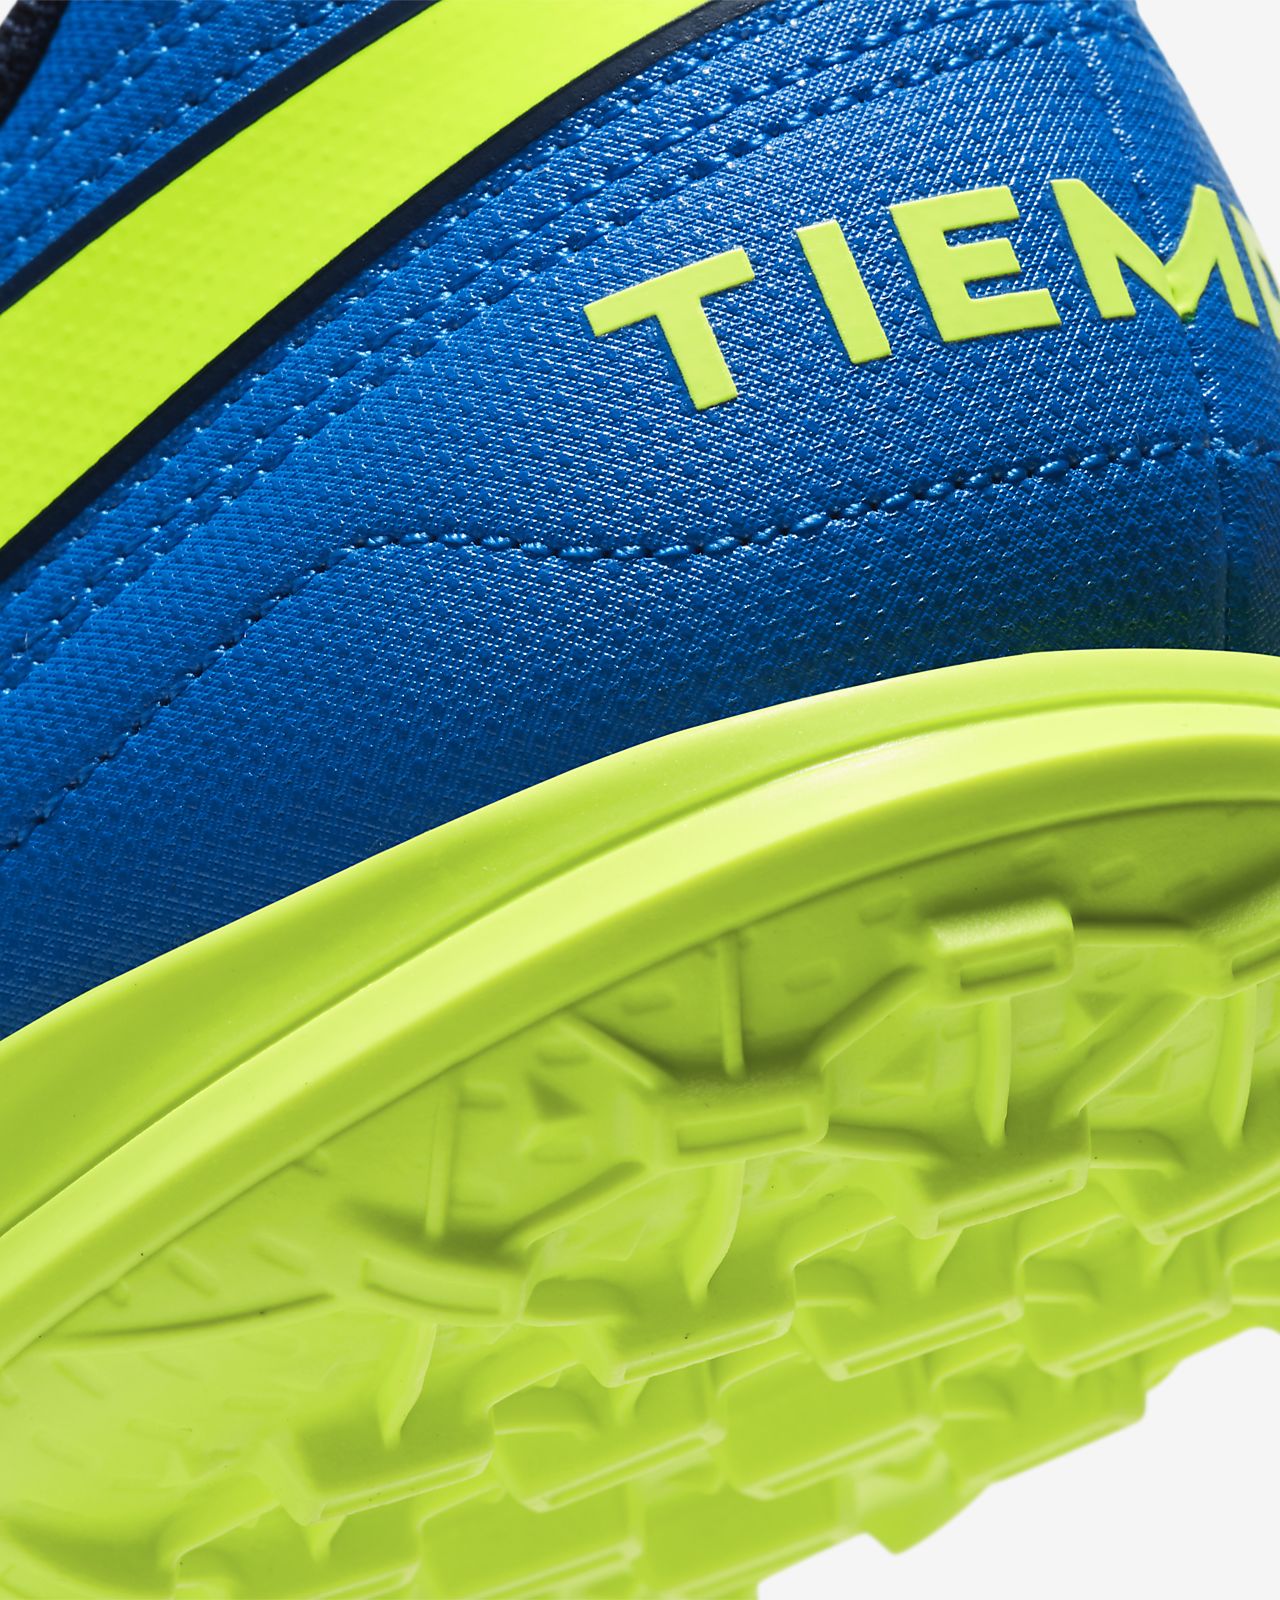 Nike Tiempo Legend 8 Academy TF Indoor Soccer Shoes.